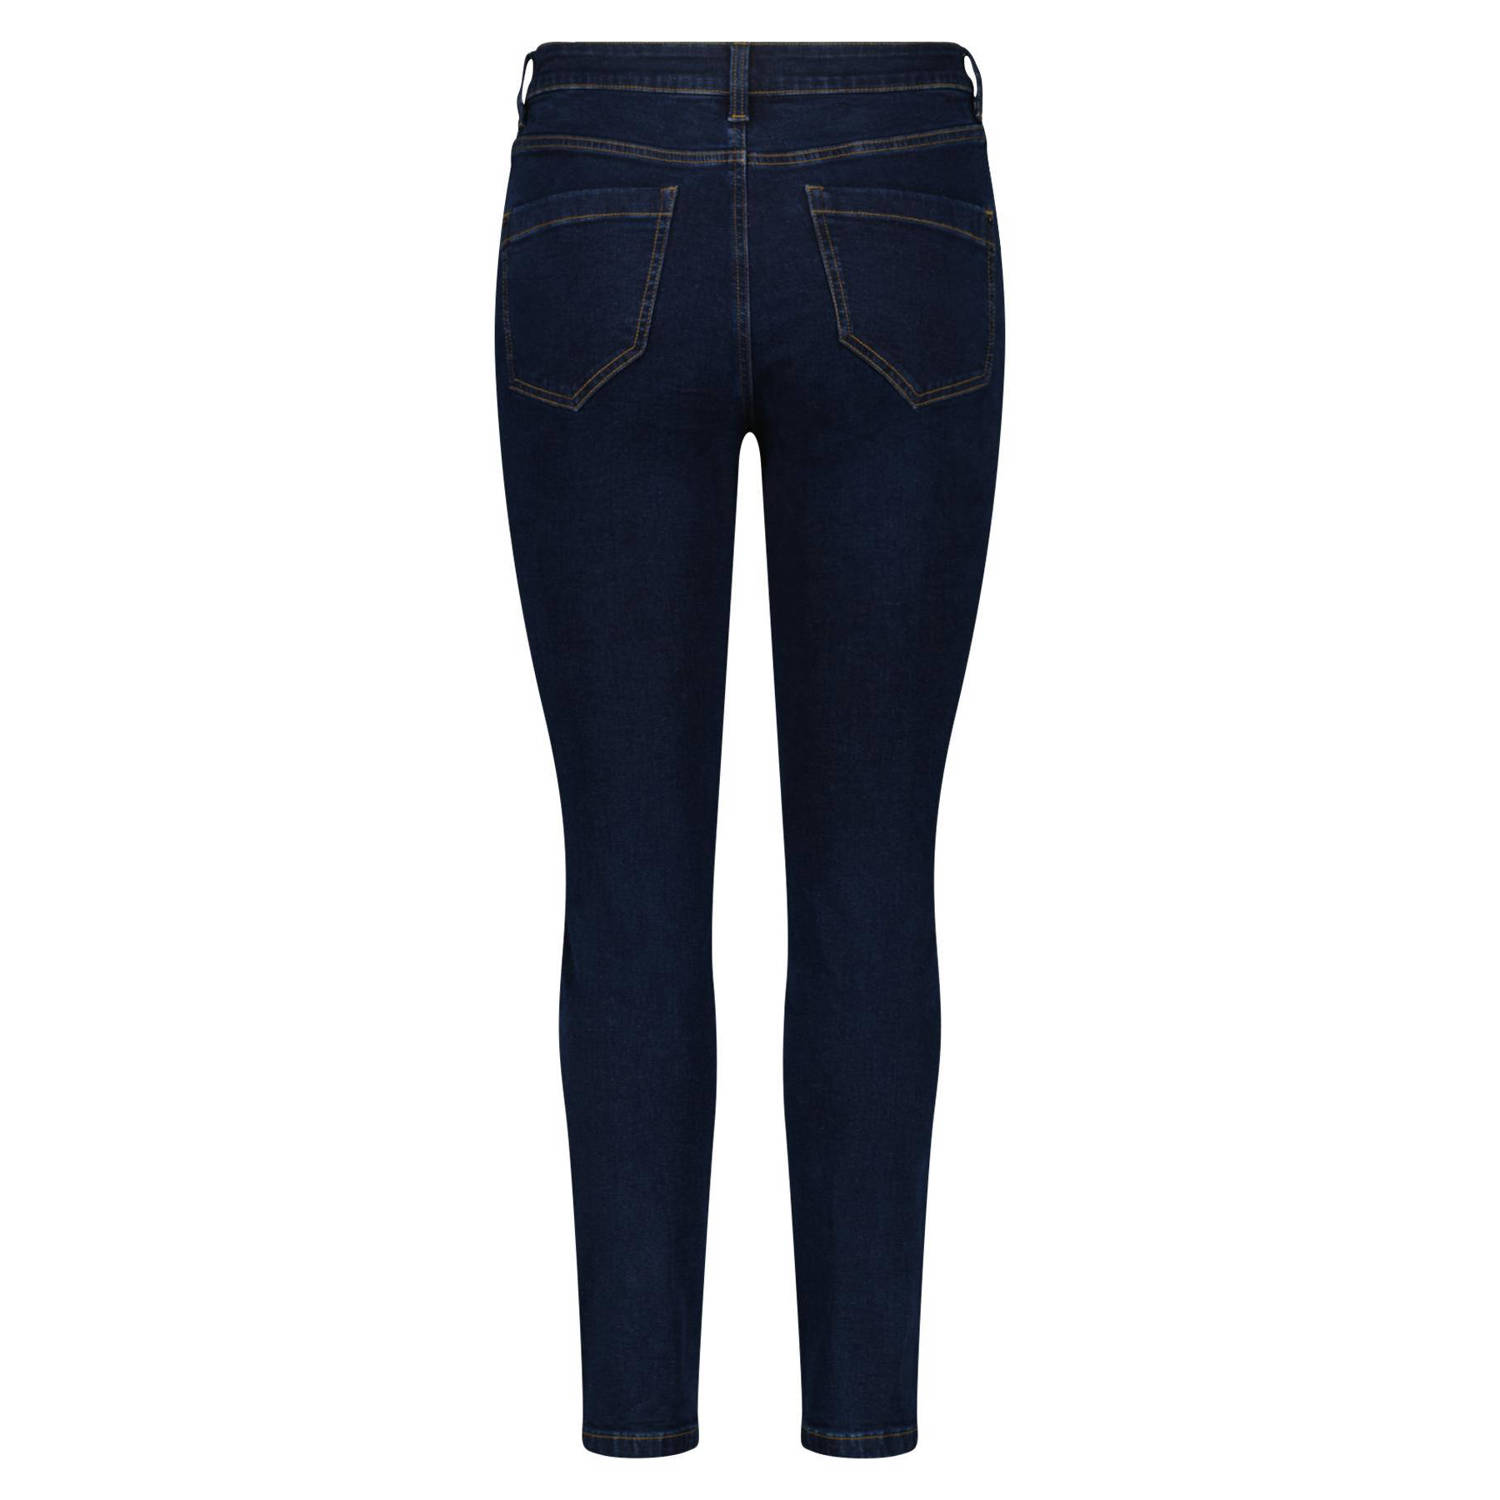 MS Mode slim fit jeans dark blue denim